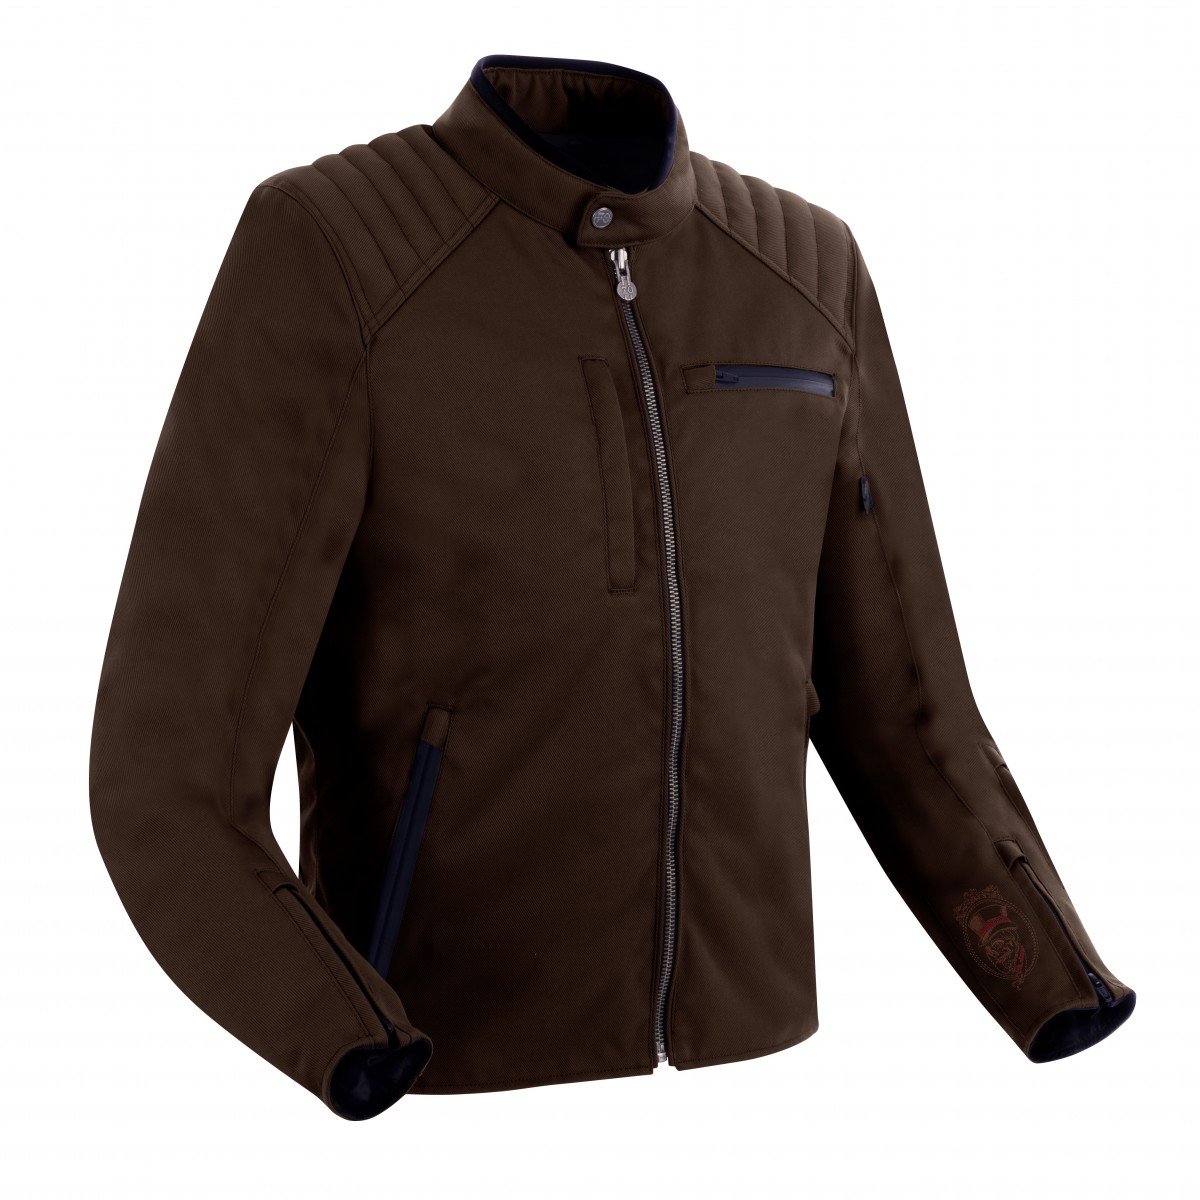 Image of Segura Eternal Jacket Brown Size 4XL ID 3660815168547